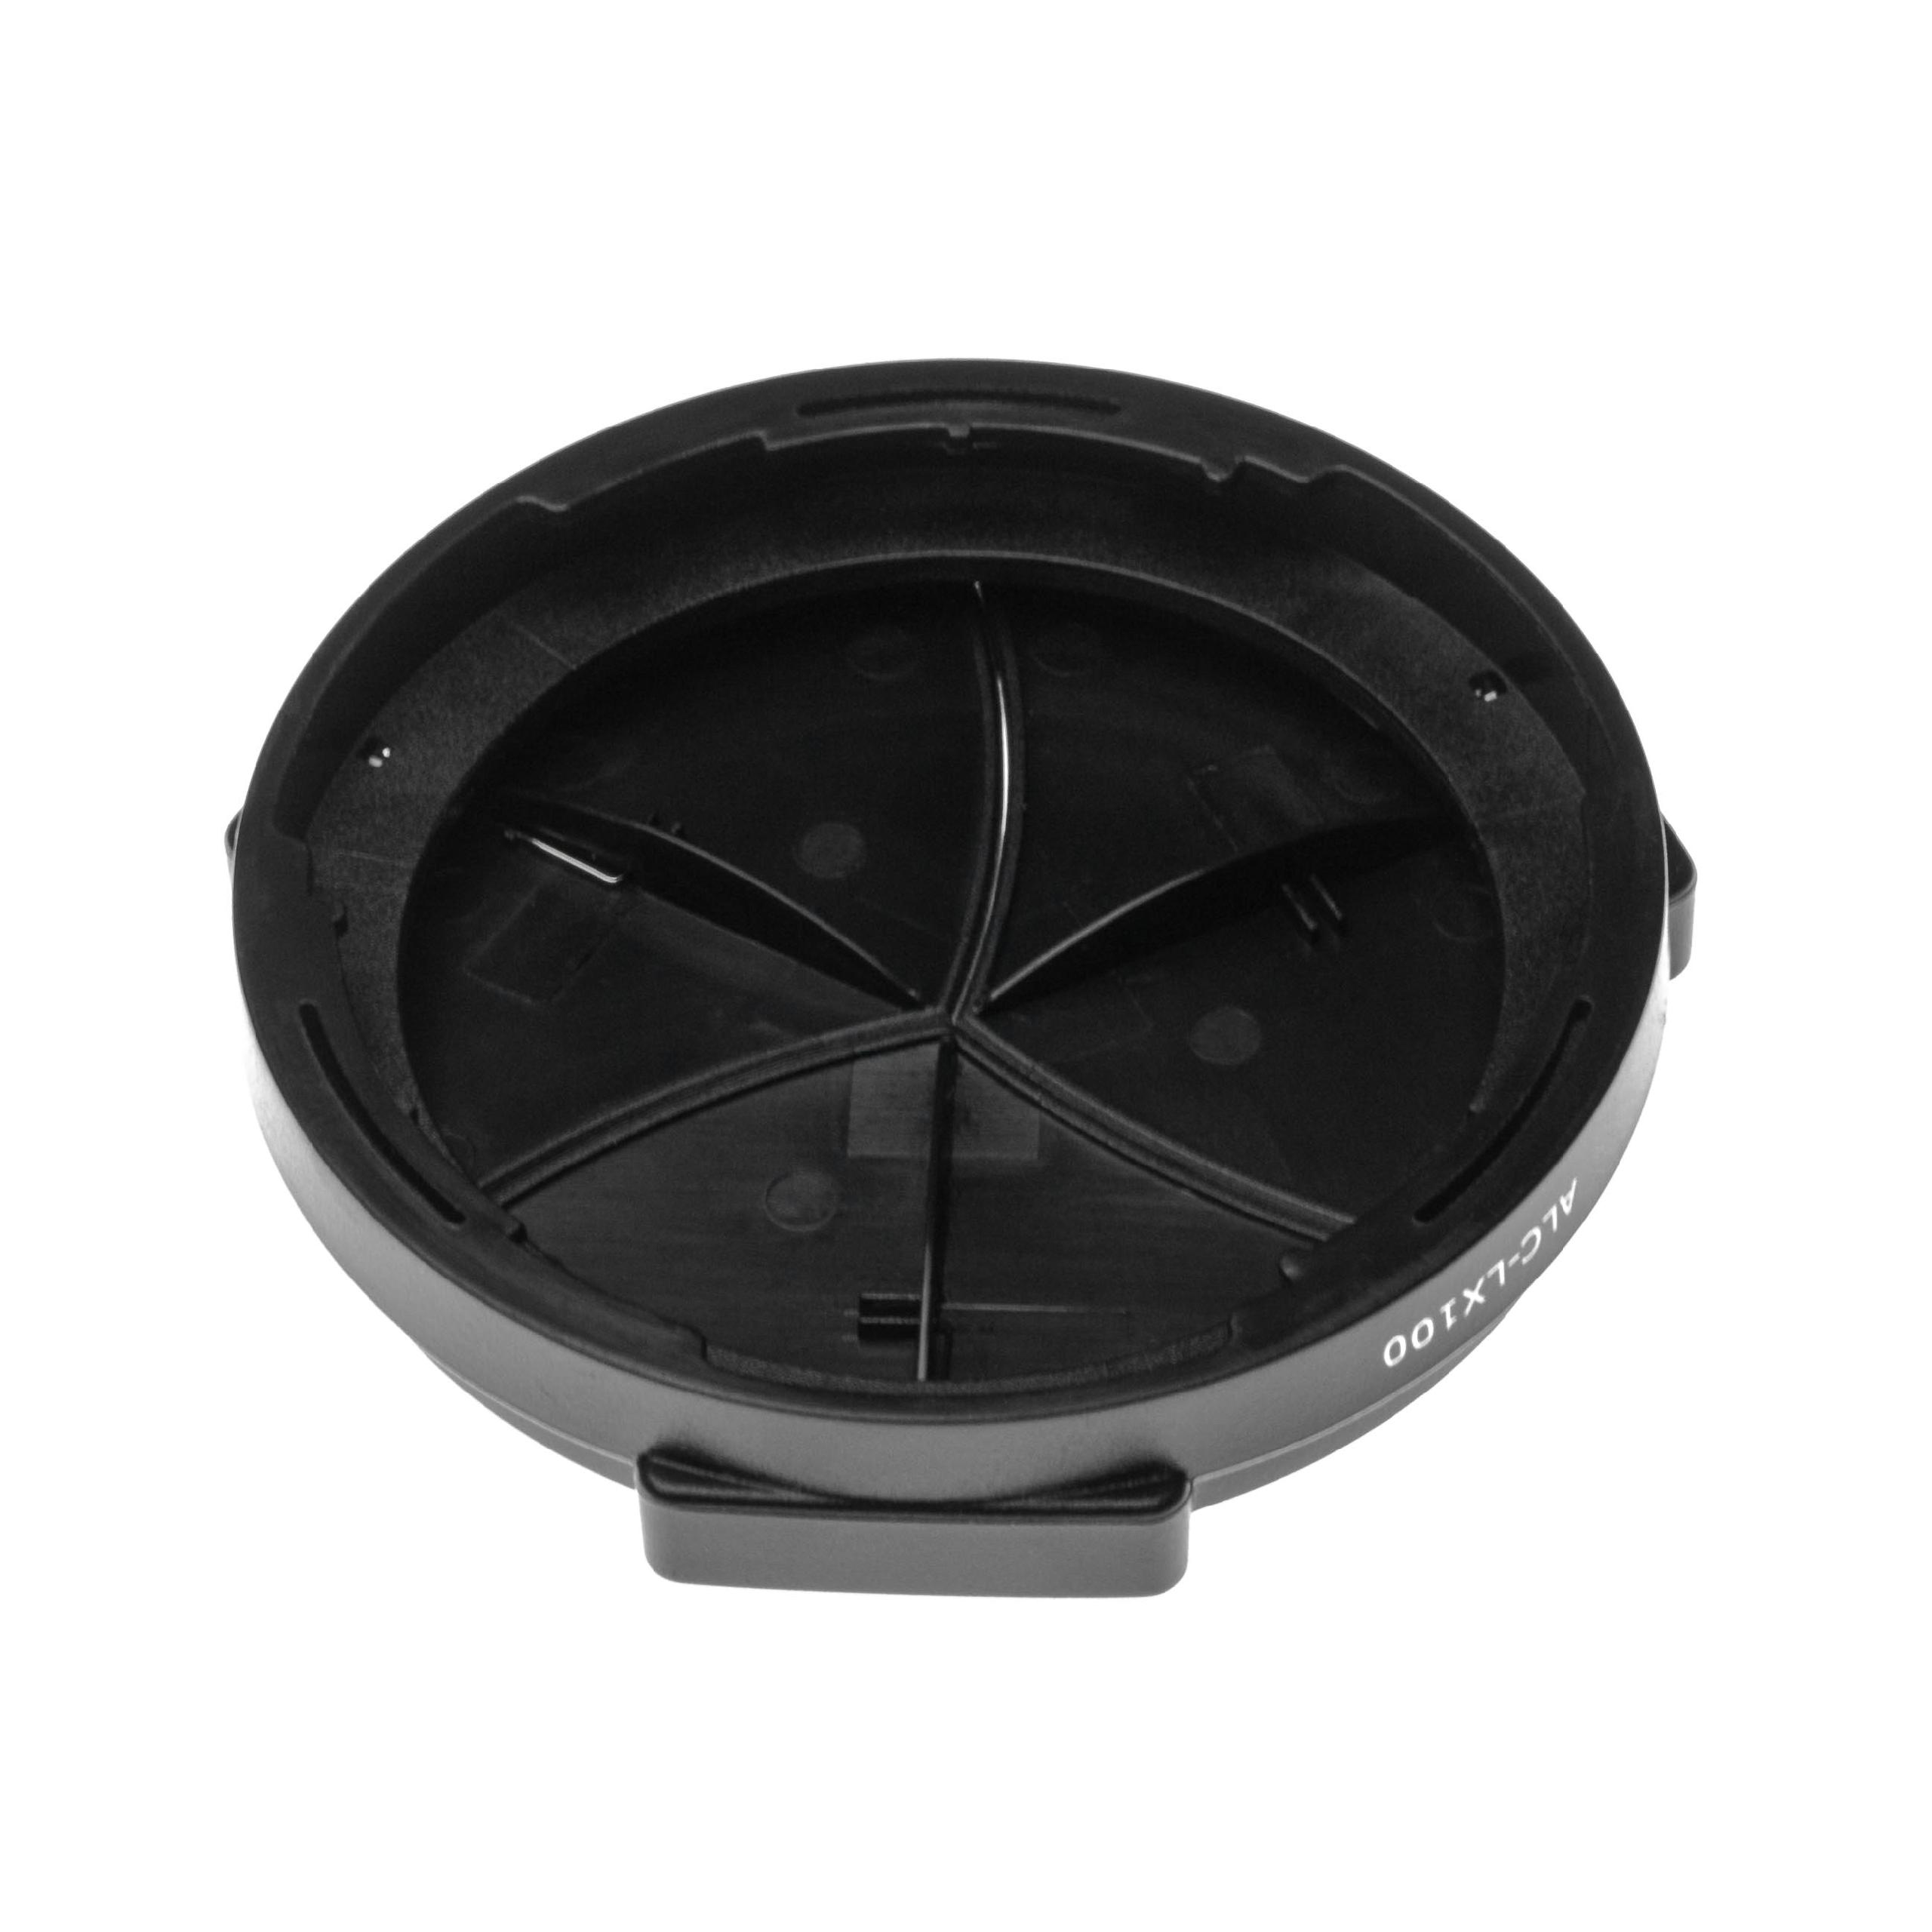 Tapa objetivo automático reemplaza ALC-LX100 BLACK para cámara Leica - plástico negro